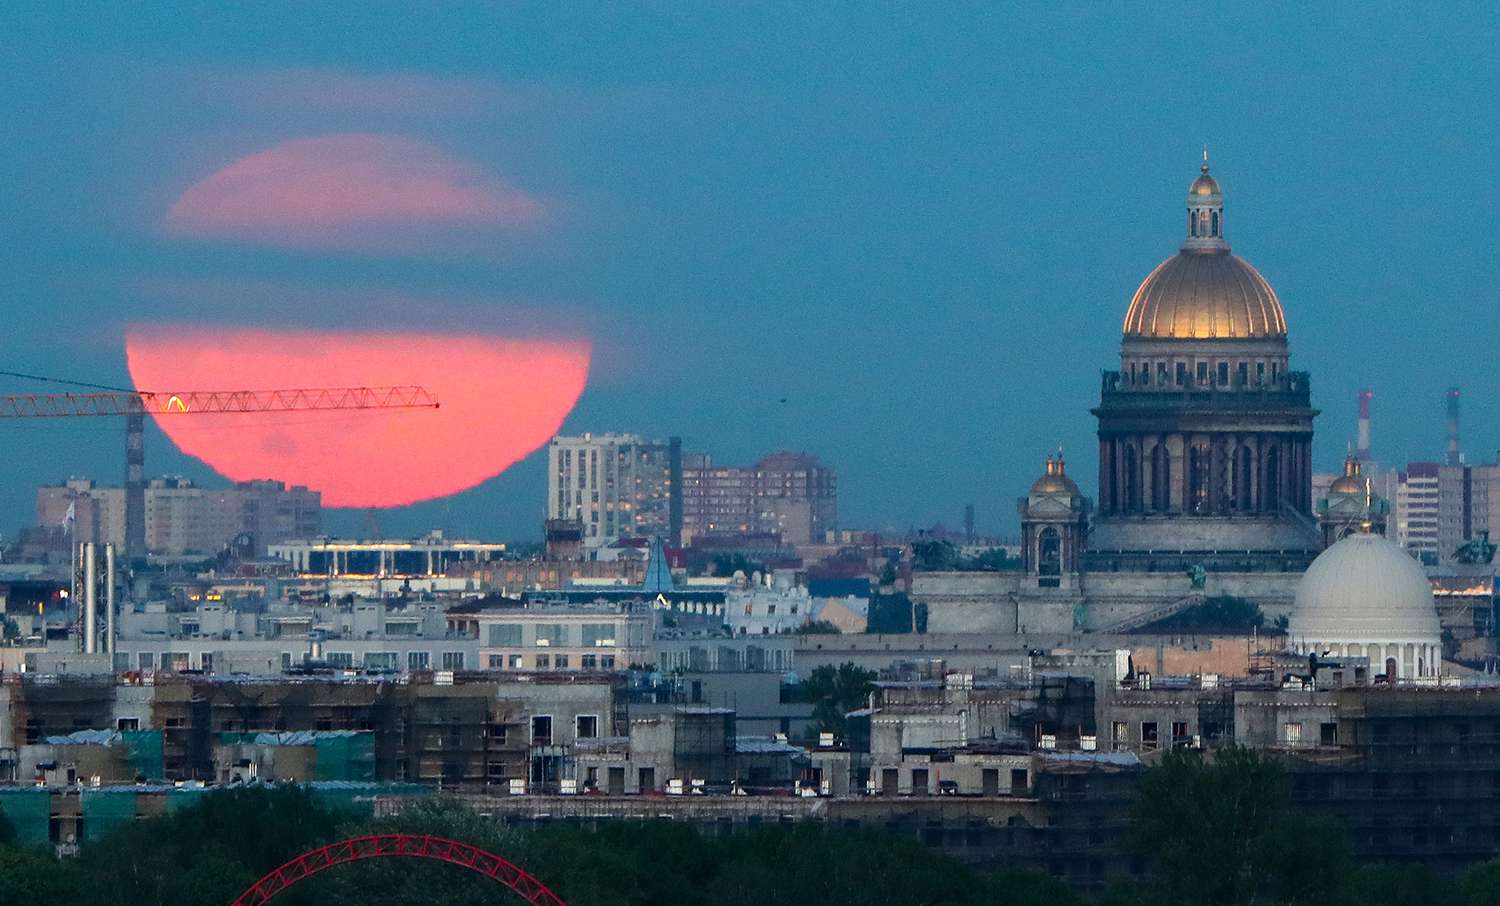 Full moon over St Petersburg